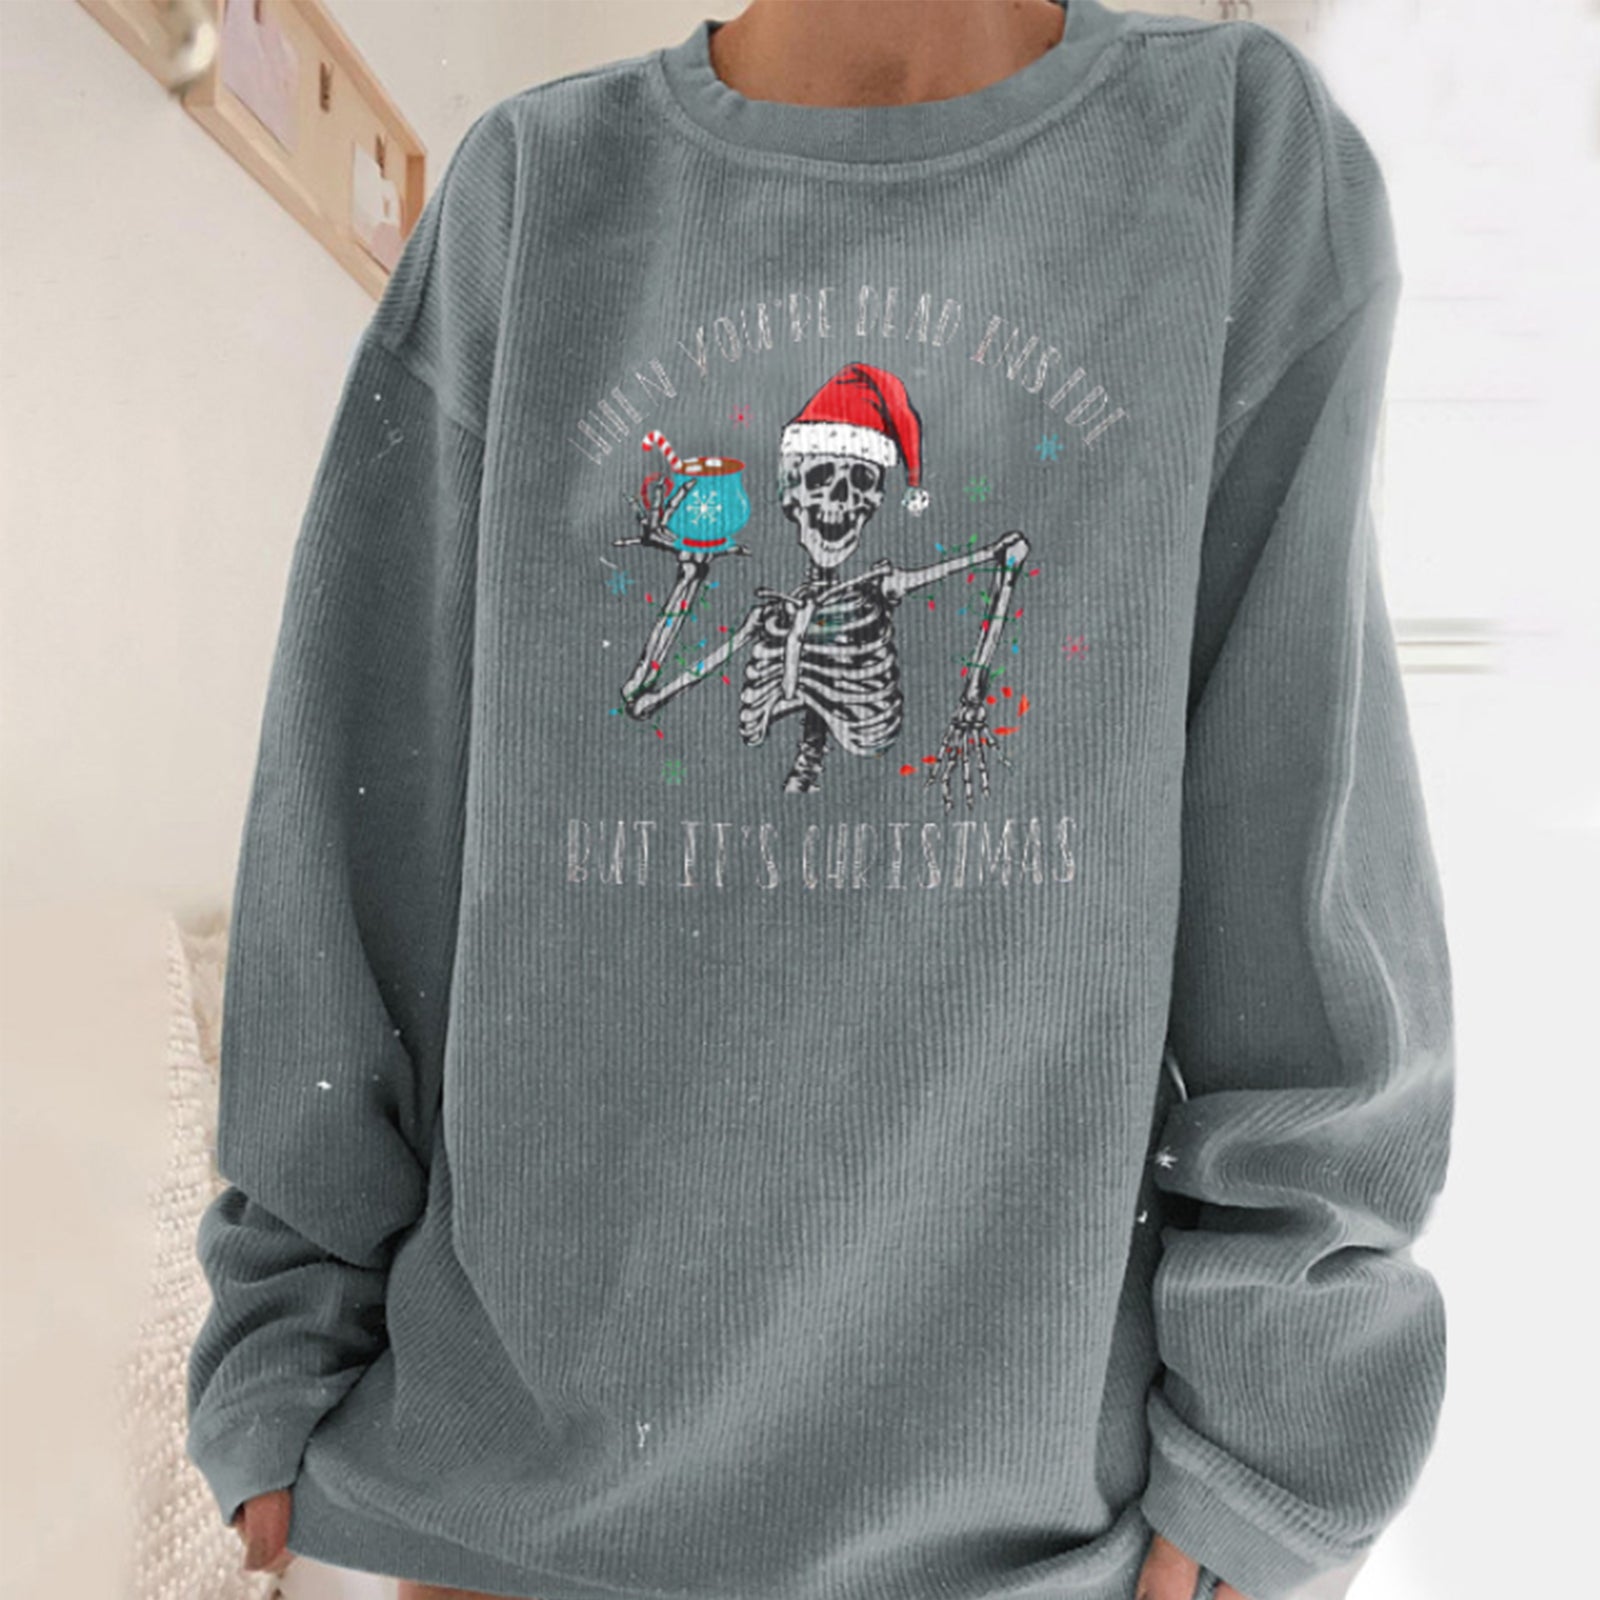 Minnieskull Cool Happy Skeleton But It Christmas Women Sweatshirt - chicyea